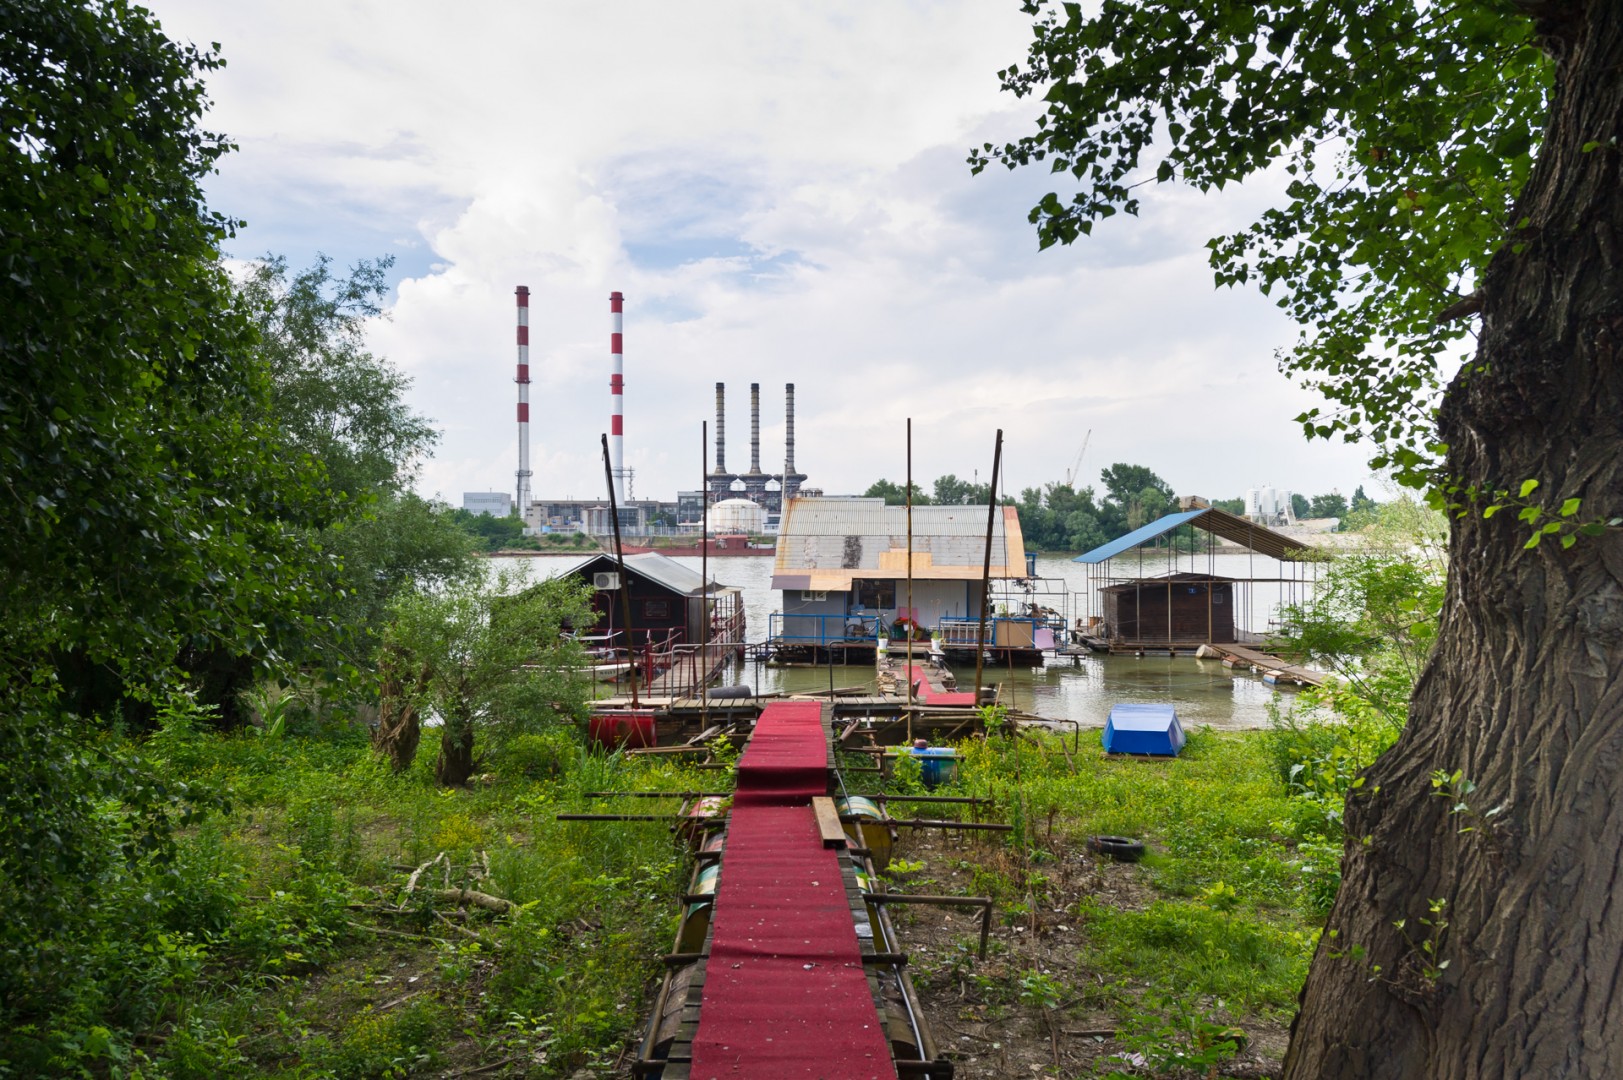 Serbia Serbien Belgrad Kraftwerk Hausboote Floating Homes Schwimmende Häuser